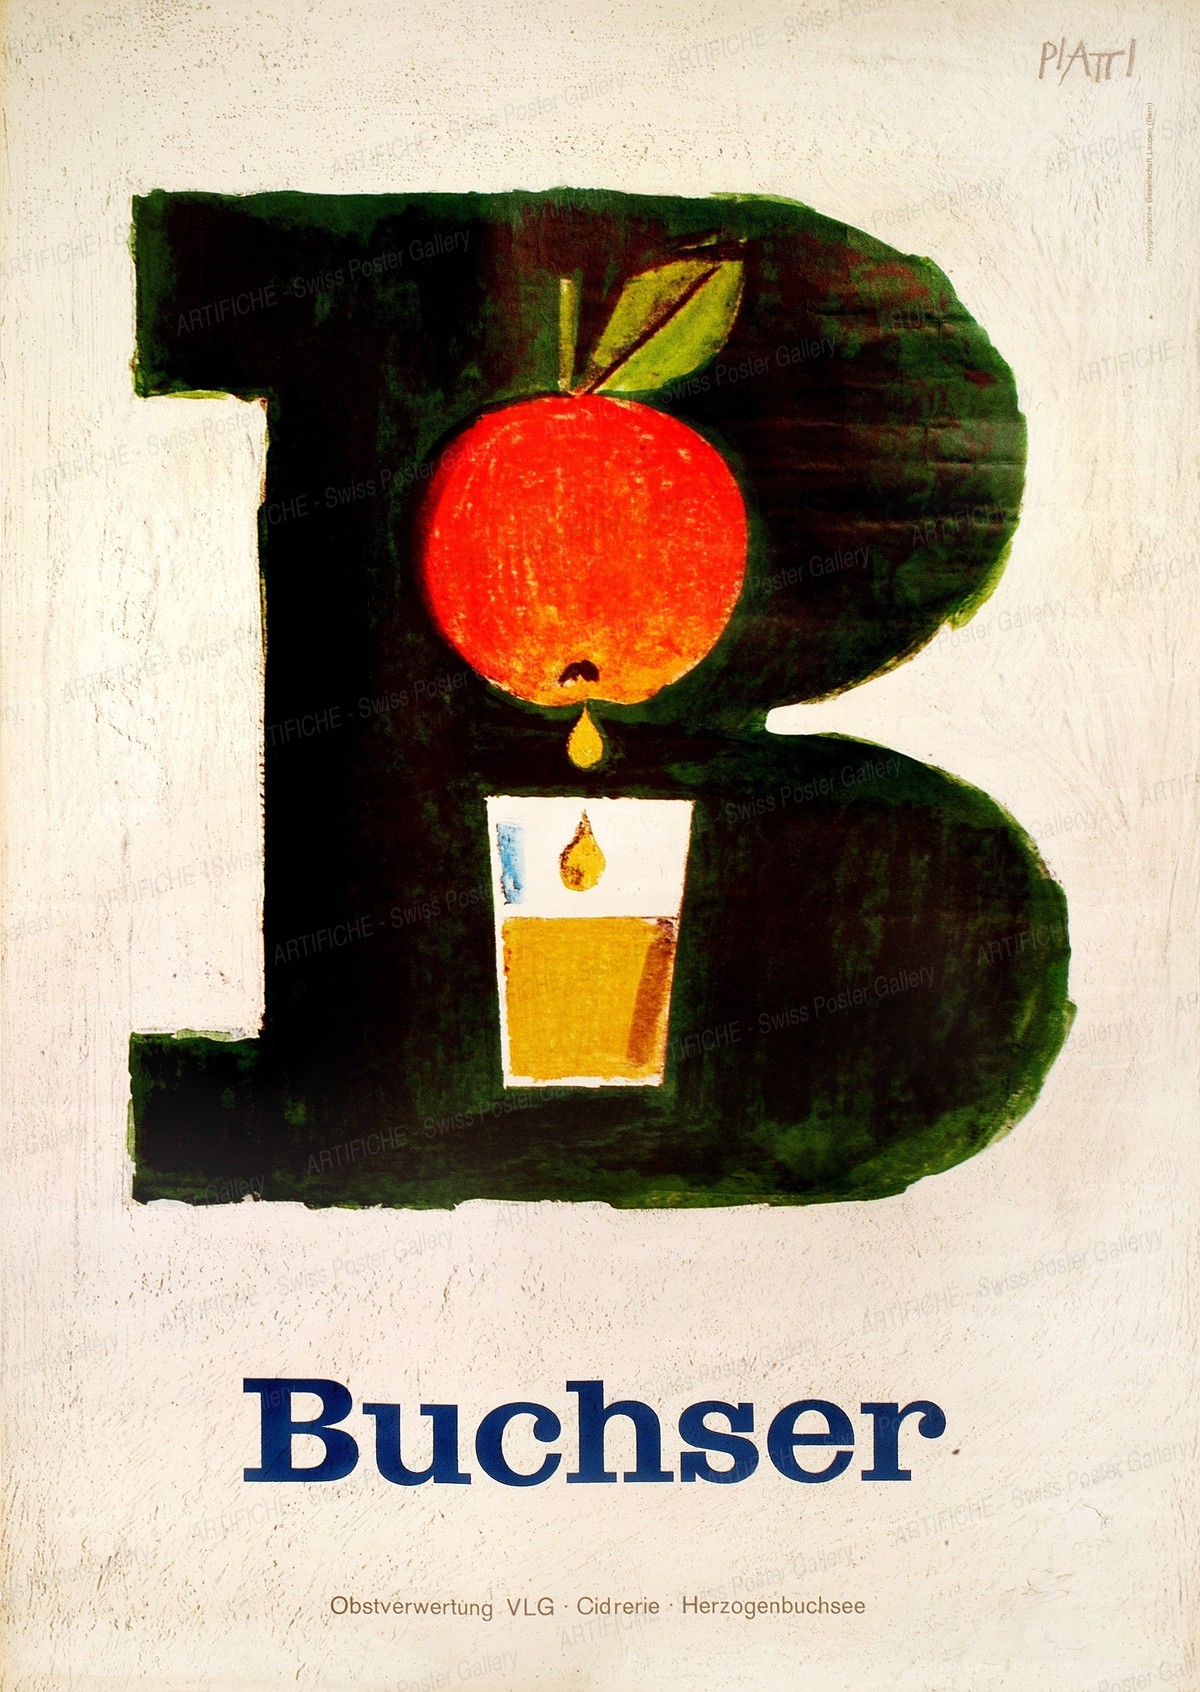 Buchser fruit drinks, Celestino Piatti